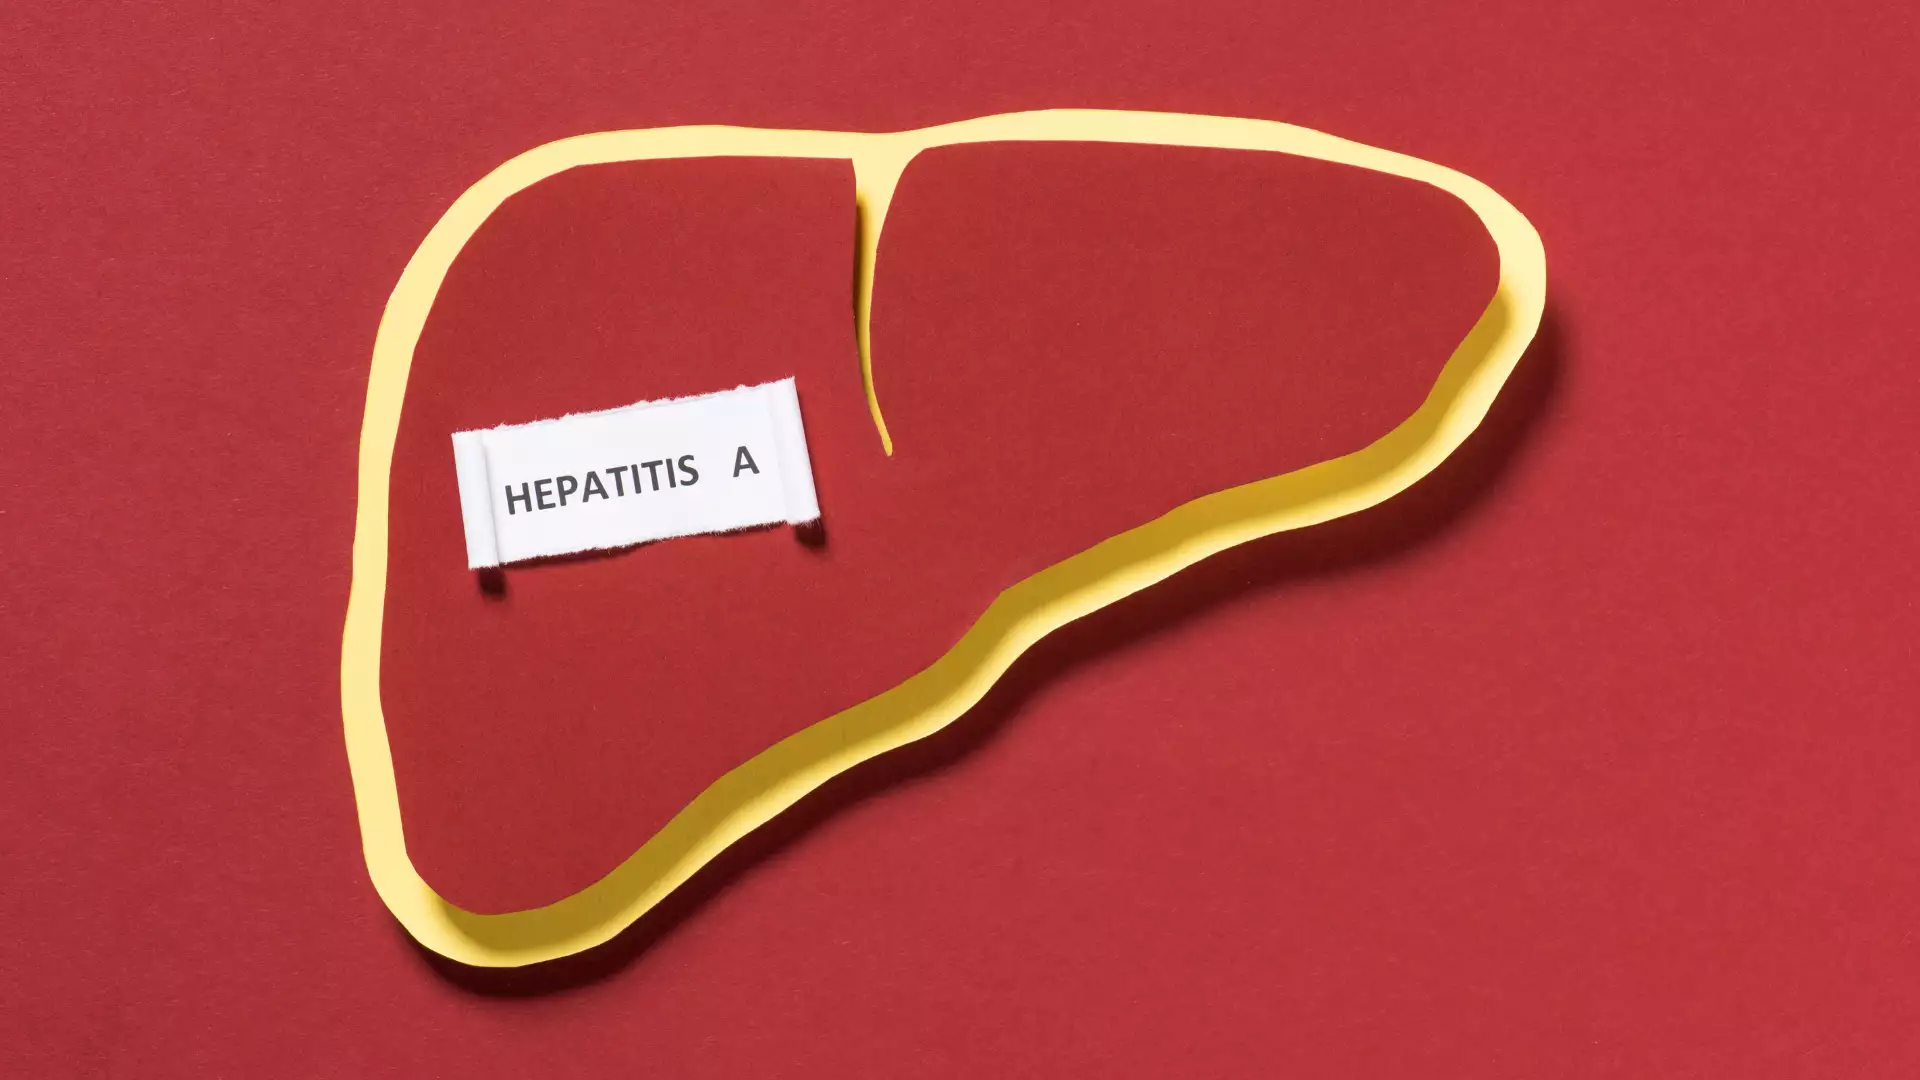 What is Hepatitis A?